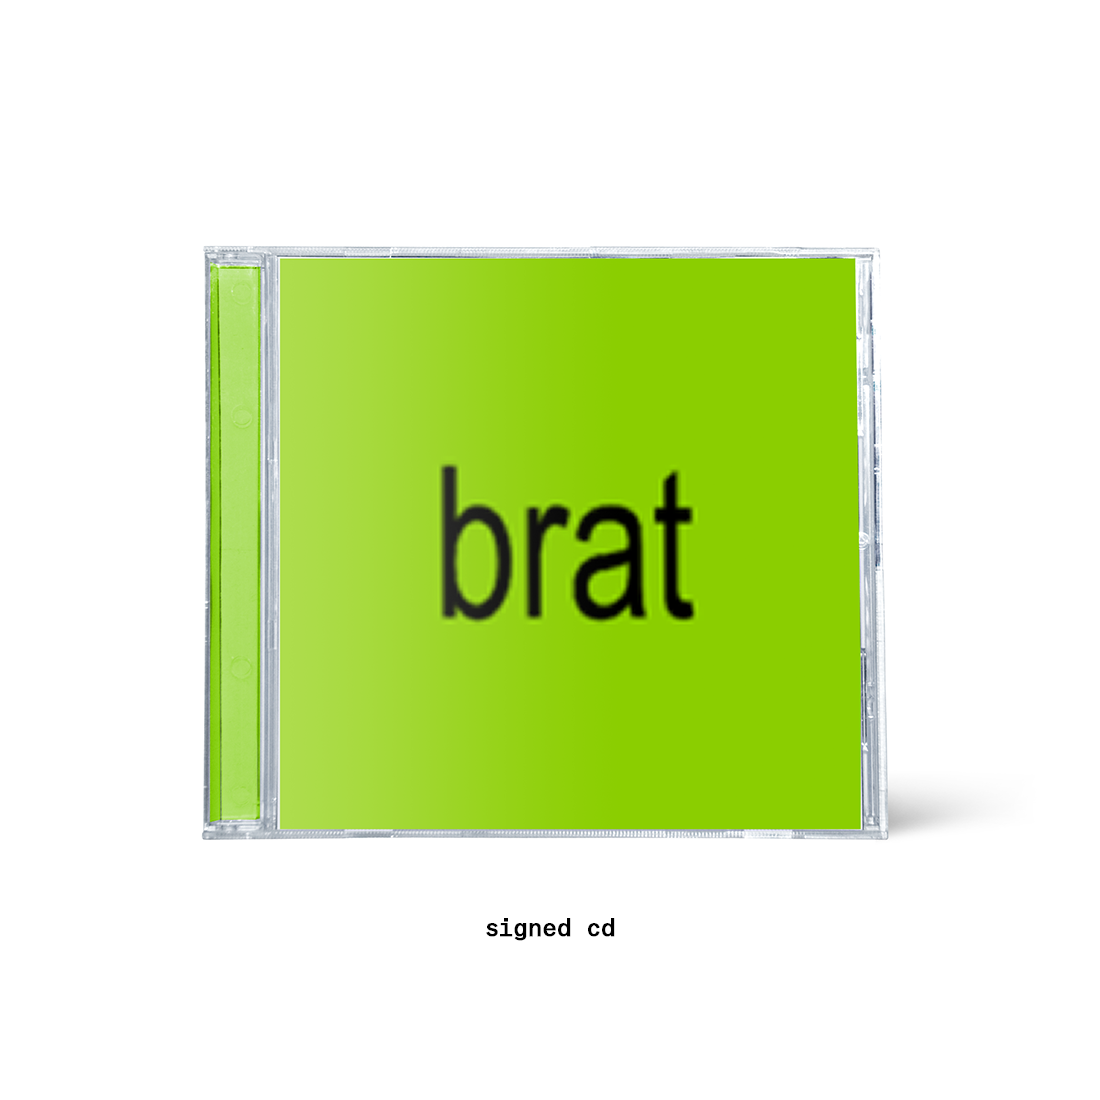 BRAT (signed cd)